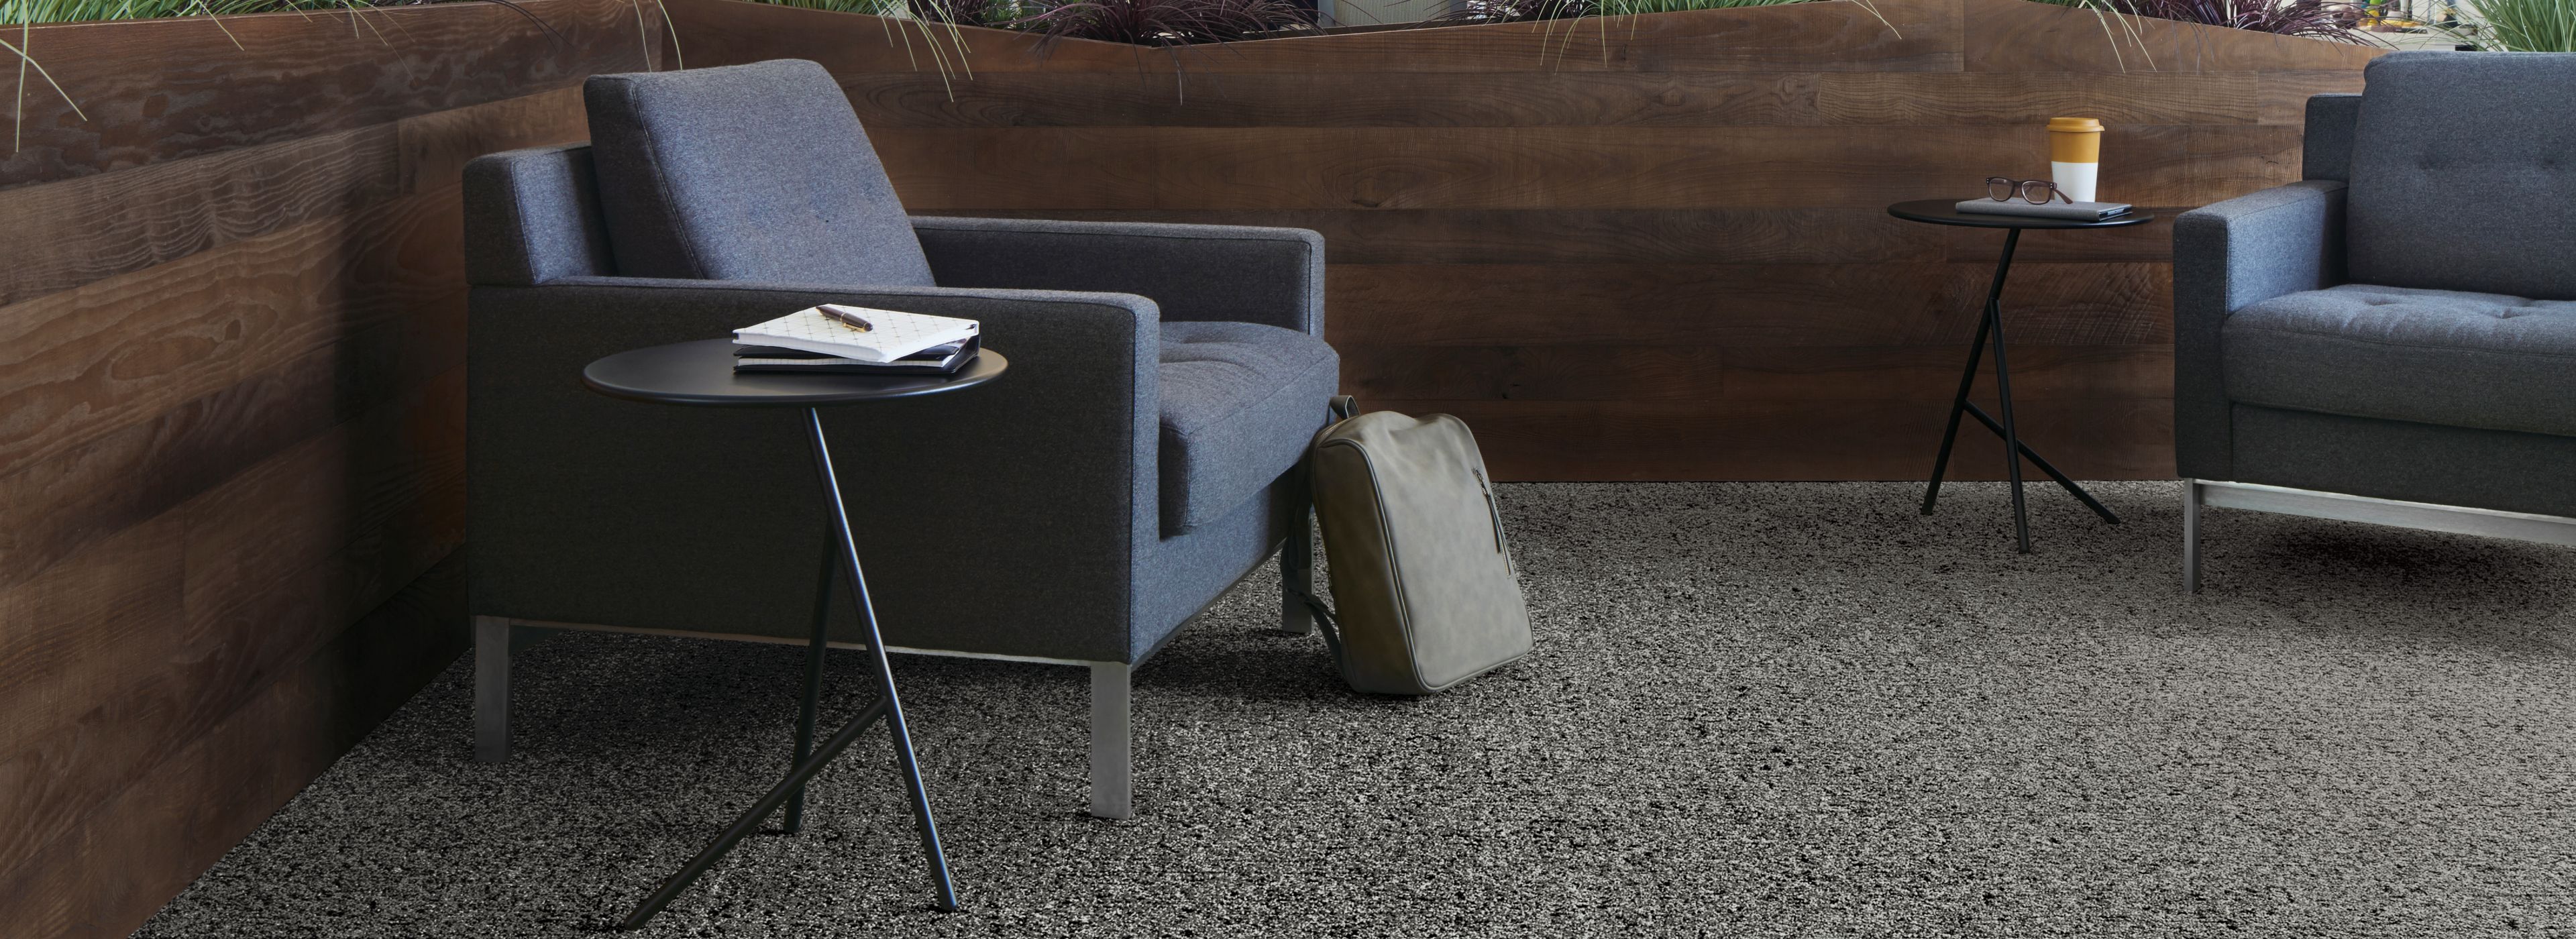 Interface Riverwalk carpet tile in lounge area image number 1